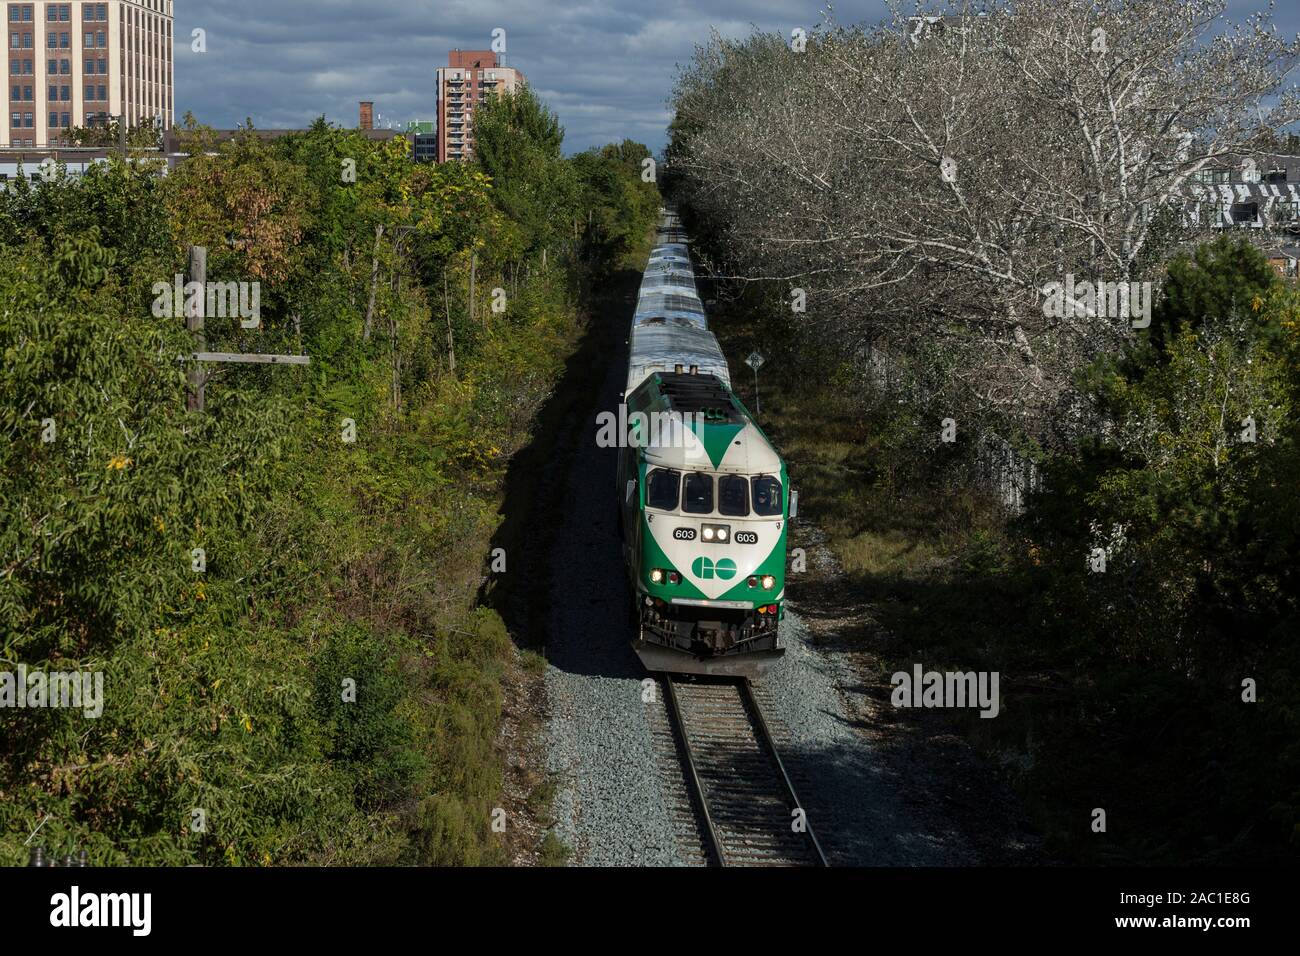 toronto go transit union-pearson express train railway transit in urban environment sunny sky autumn weather Stock Photo